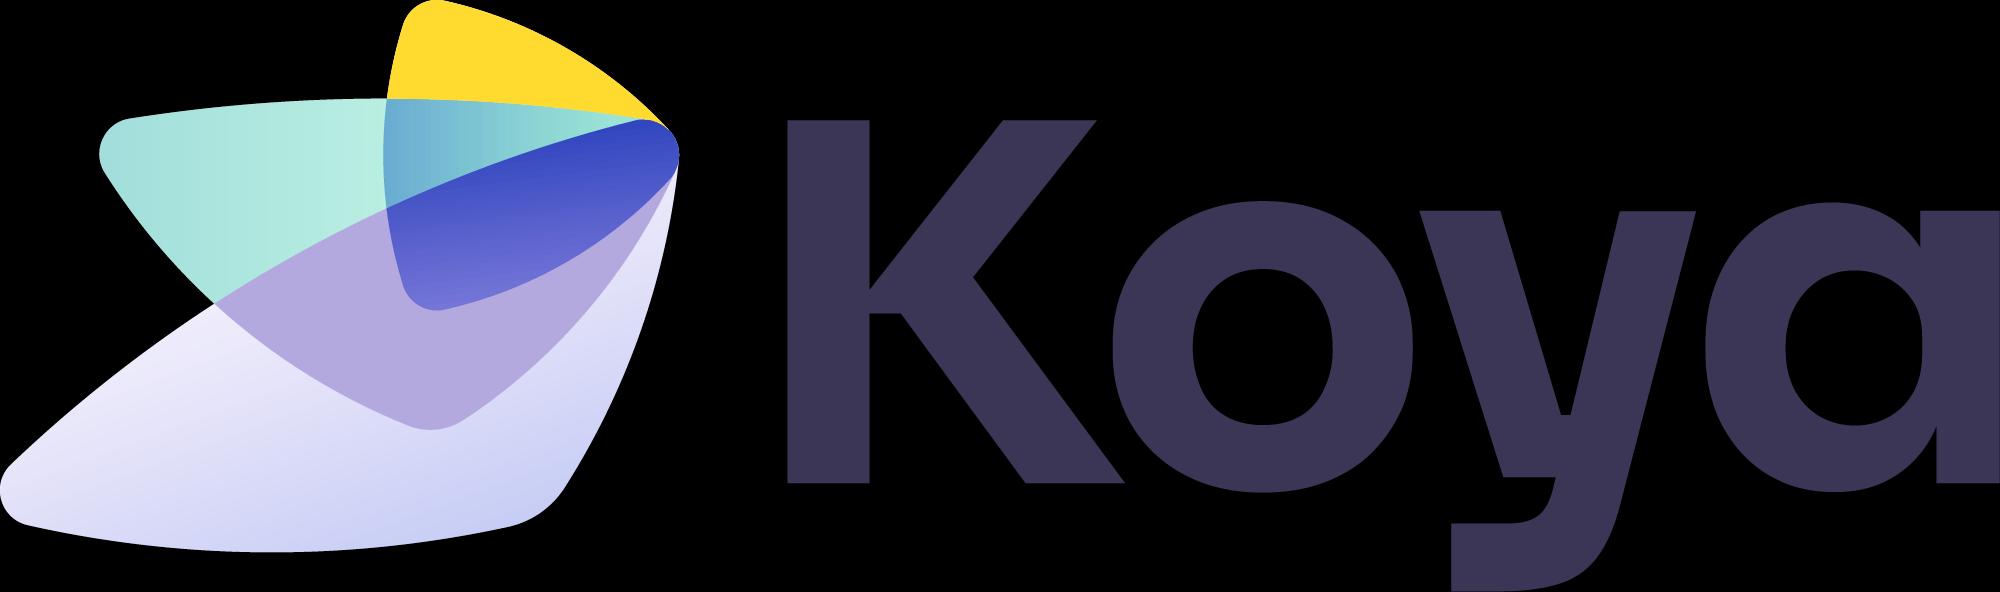 Koya Medical_logo